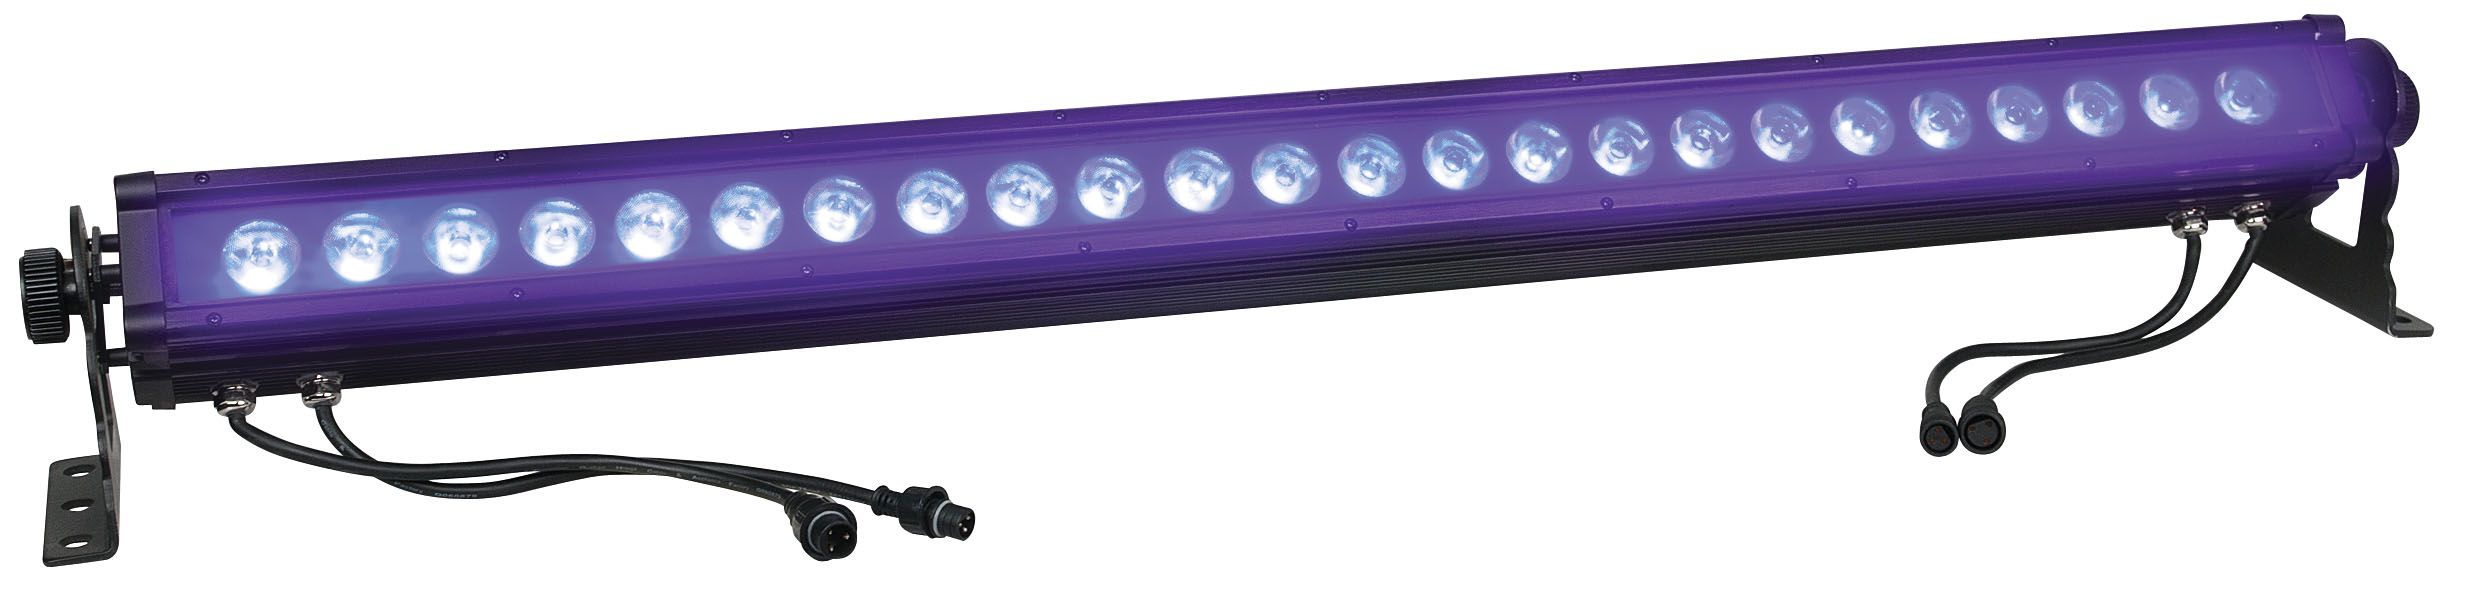 Showtec Cameleon Bar 24/1 UV mit 24x1 Watt UV-LEDs